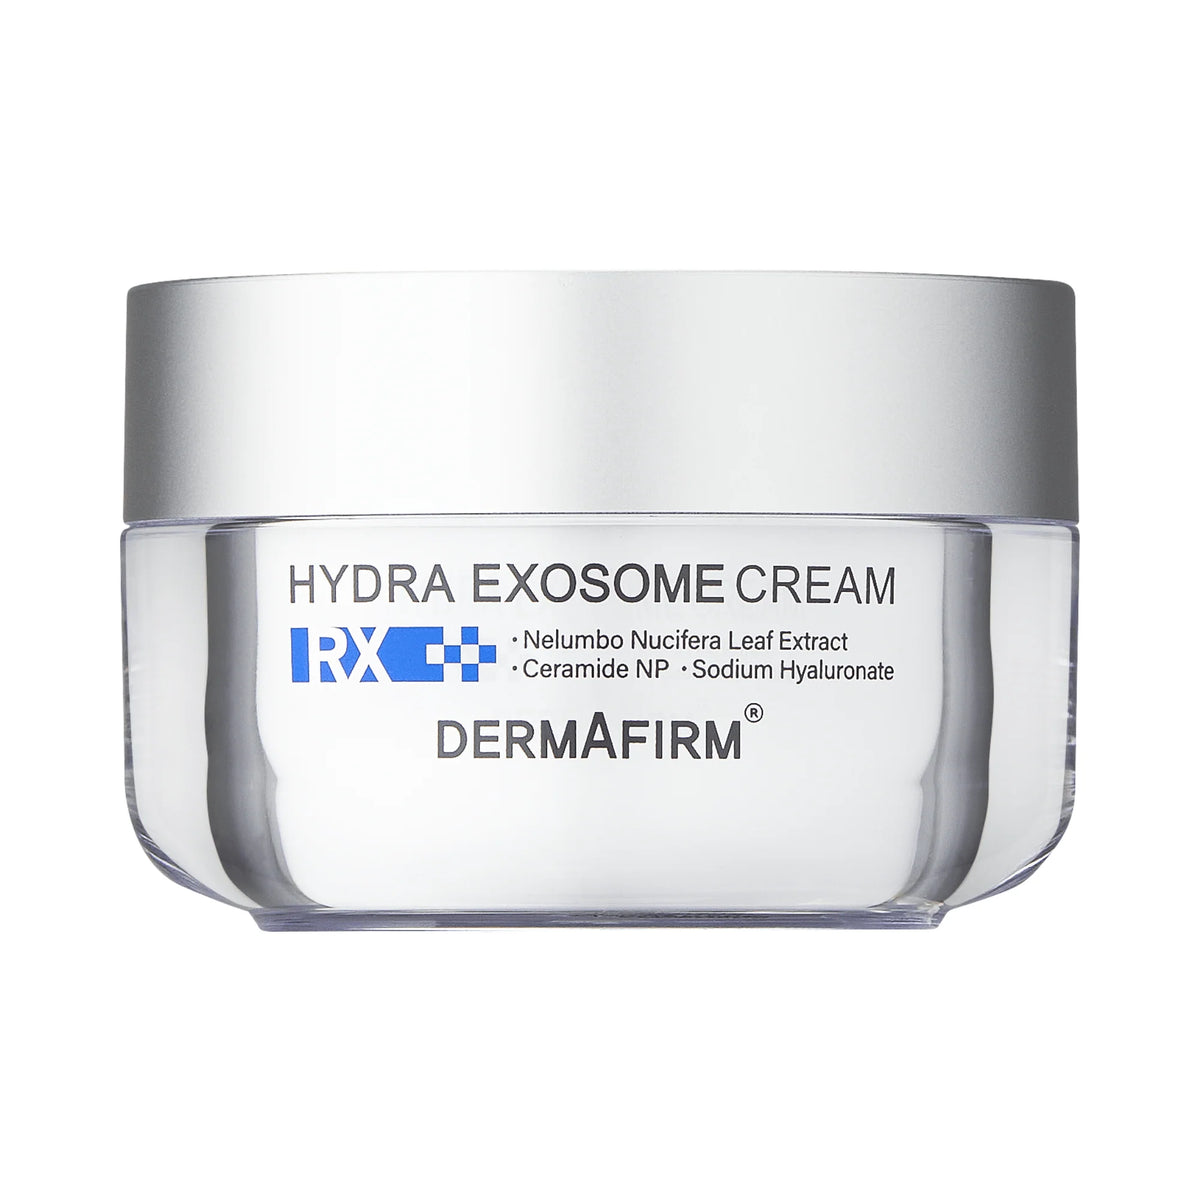 RX Hydra Exosome Cream